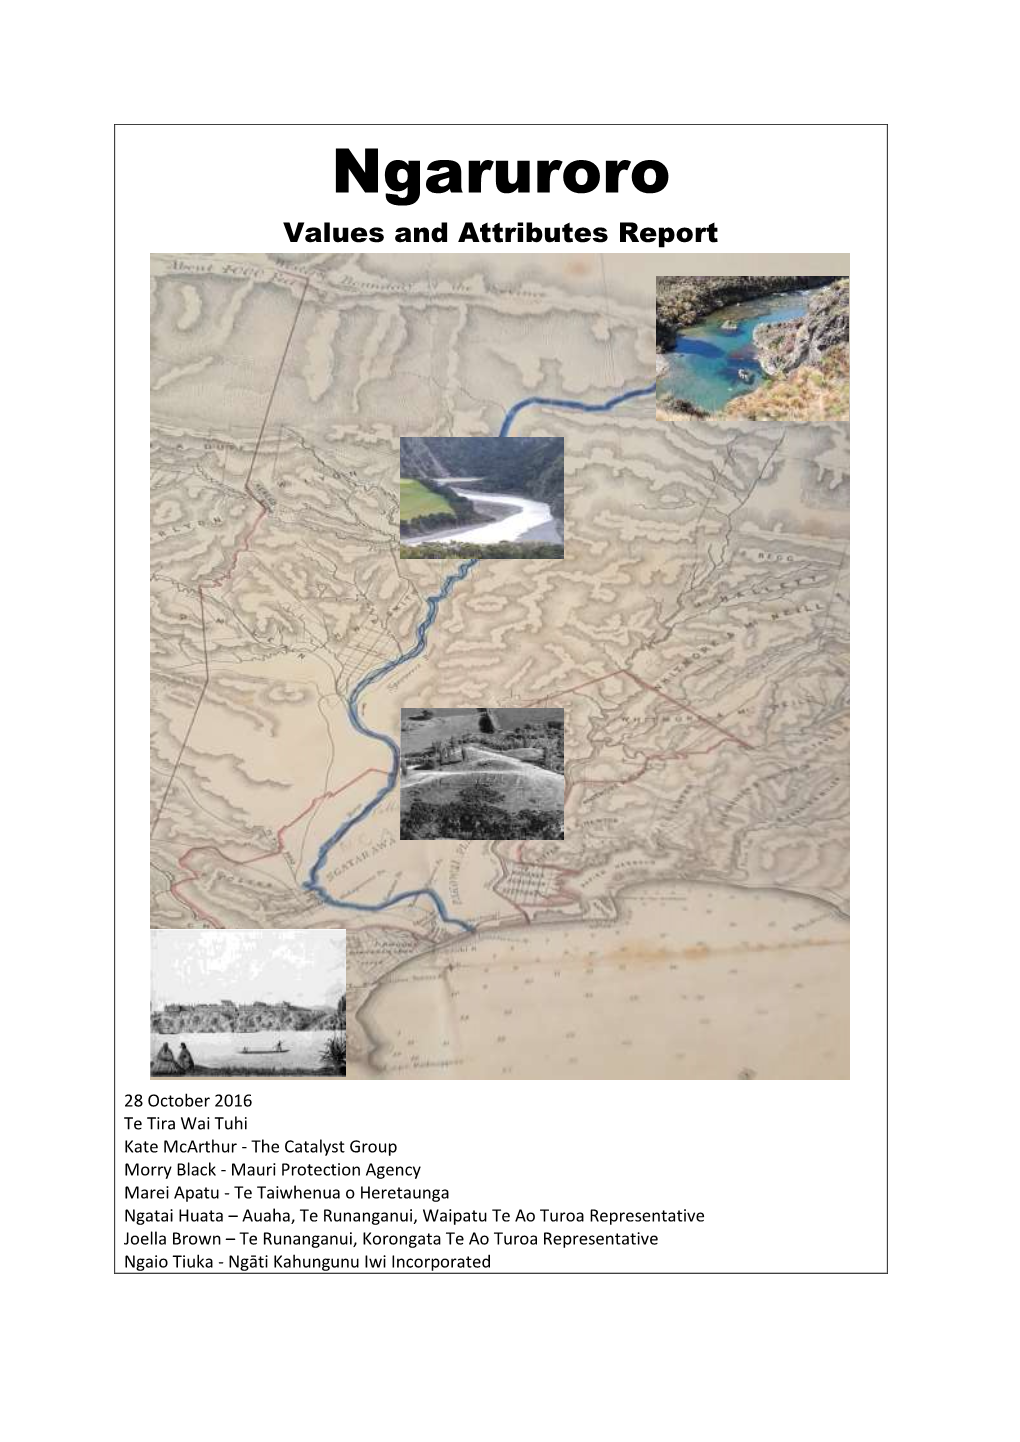 Ngaruroro Values and Attributes Report